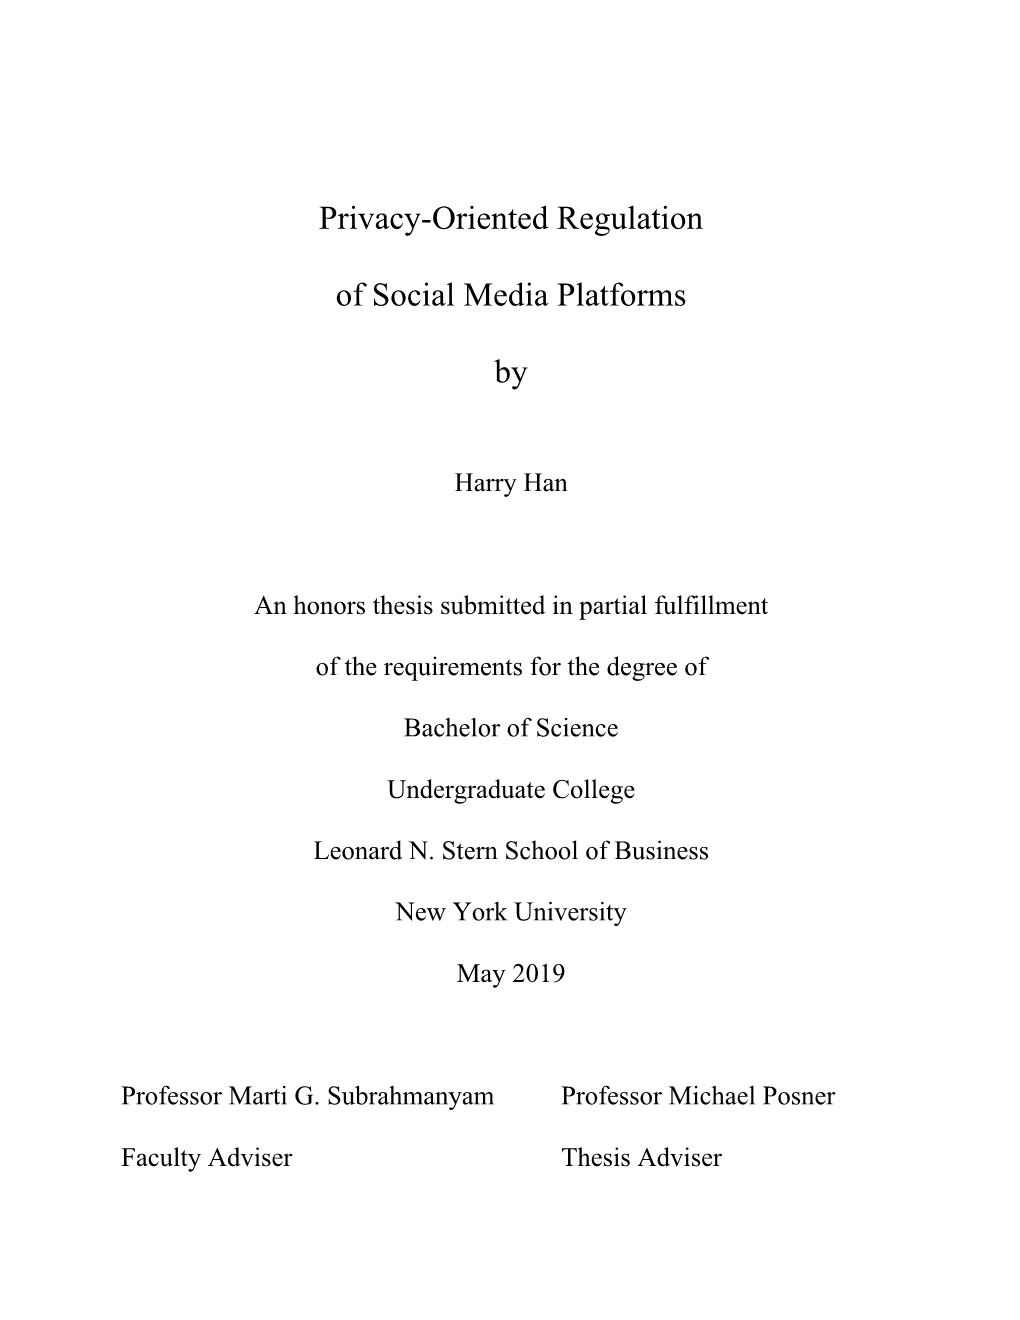 Privacy-Oriented Regulation of Social Media Platforms